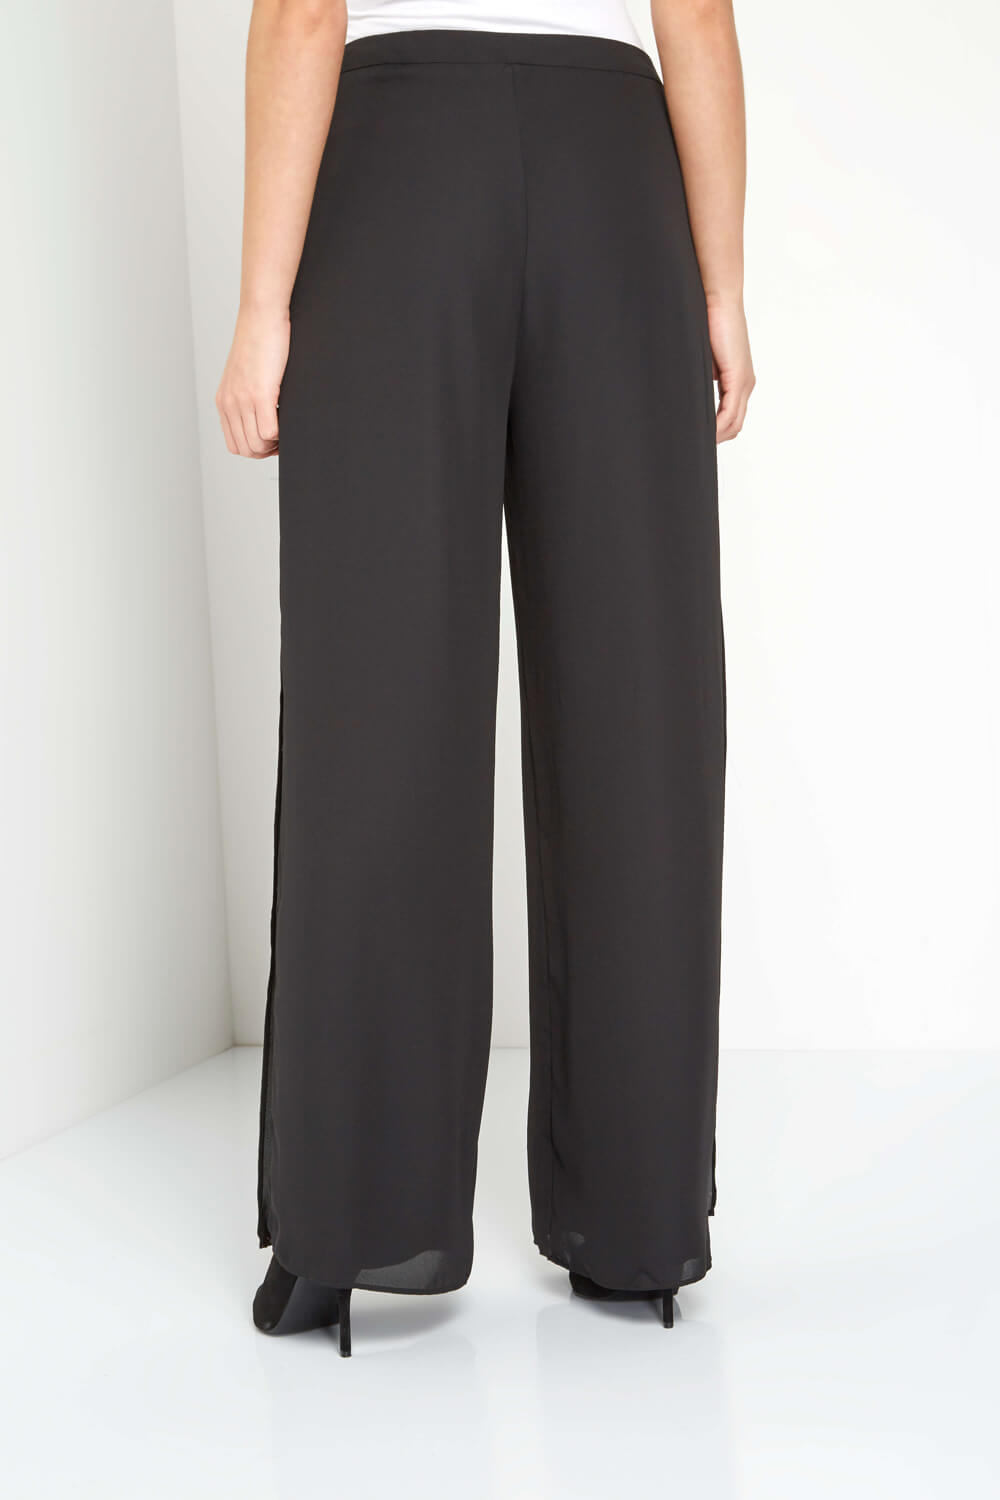 Black Side Split Trousers, Image 4 of 5